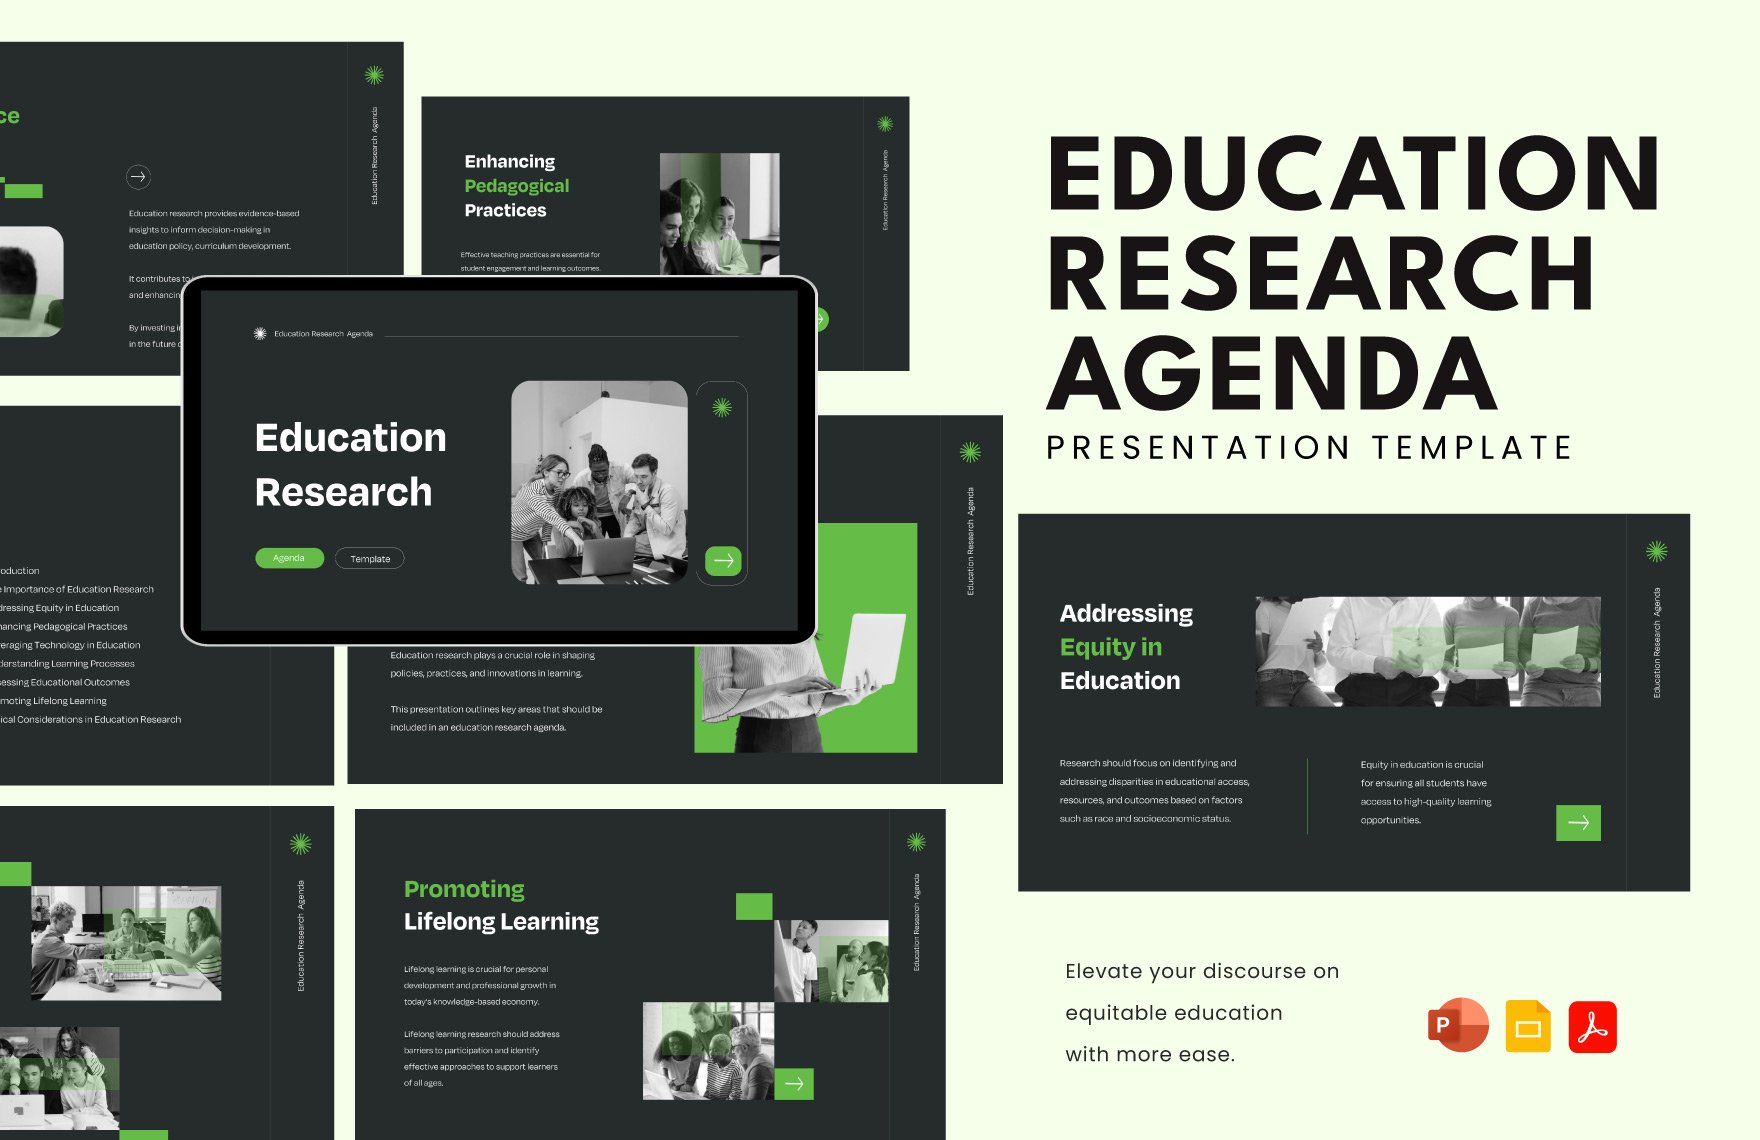 Education Research Agenda Template